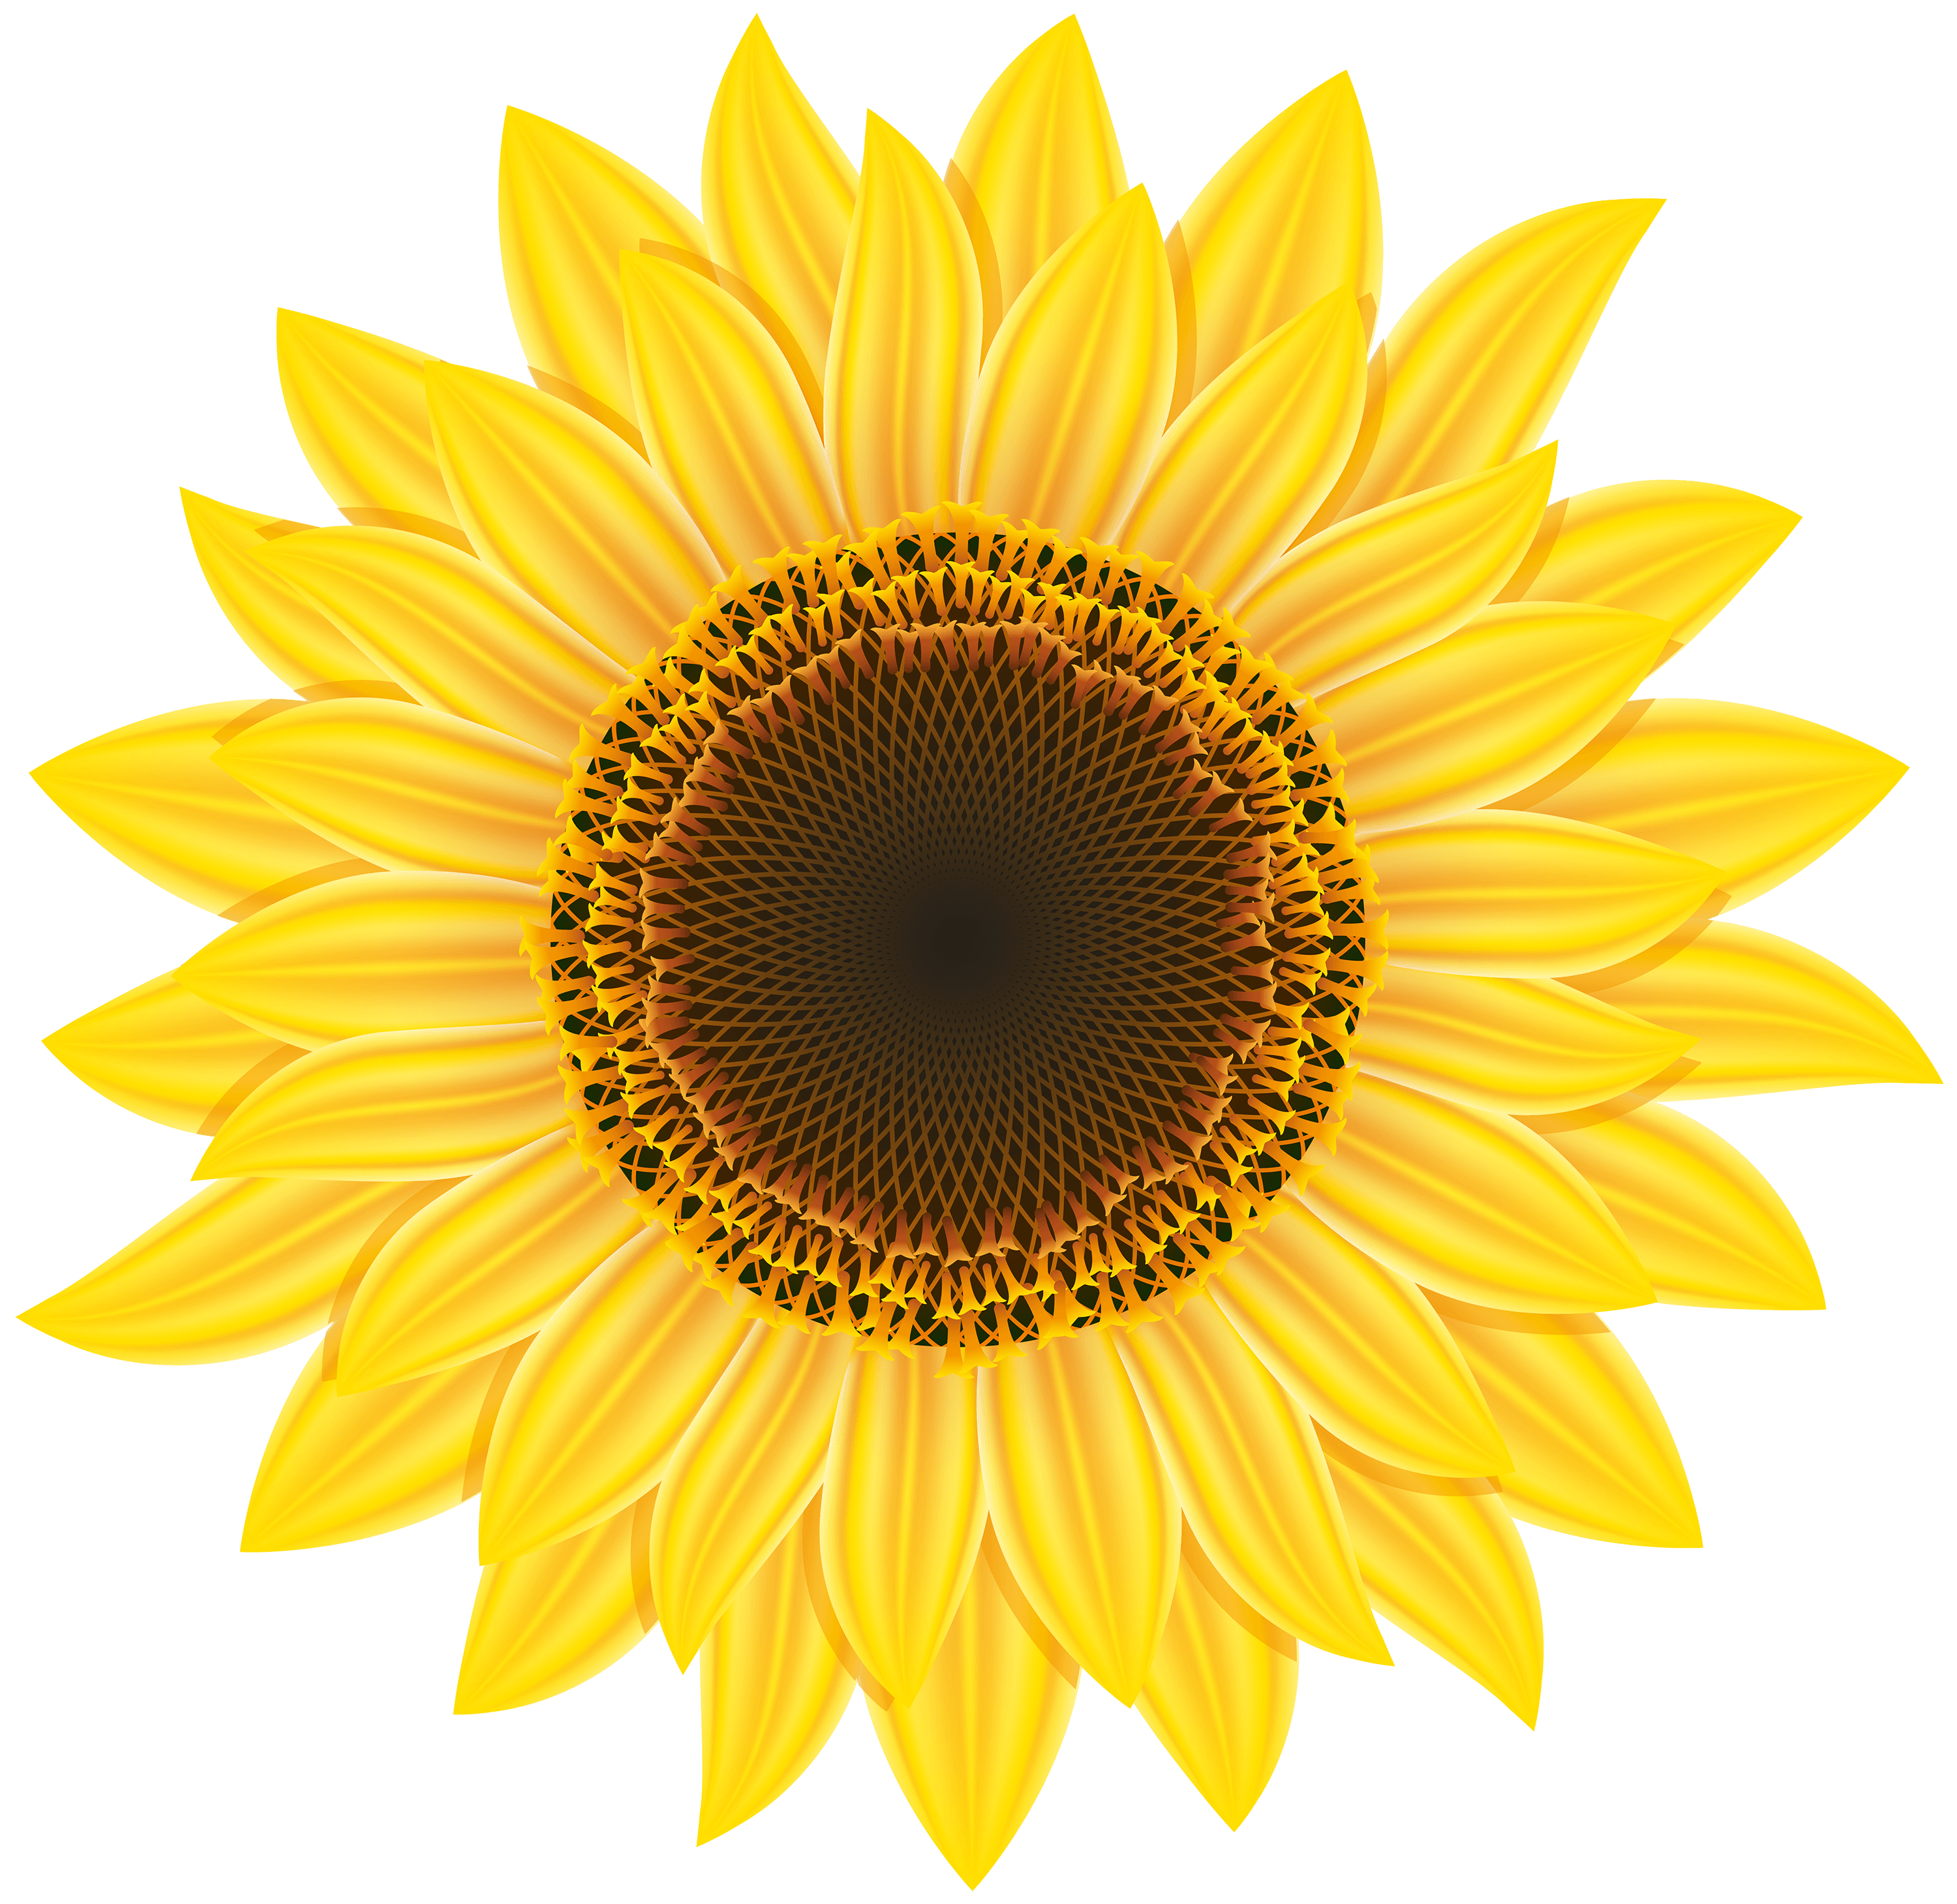 sunflower-logo-templates-cliparts-retro-logo-design-logo-sketches-logo-templates